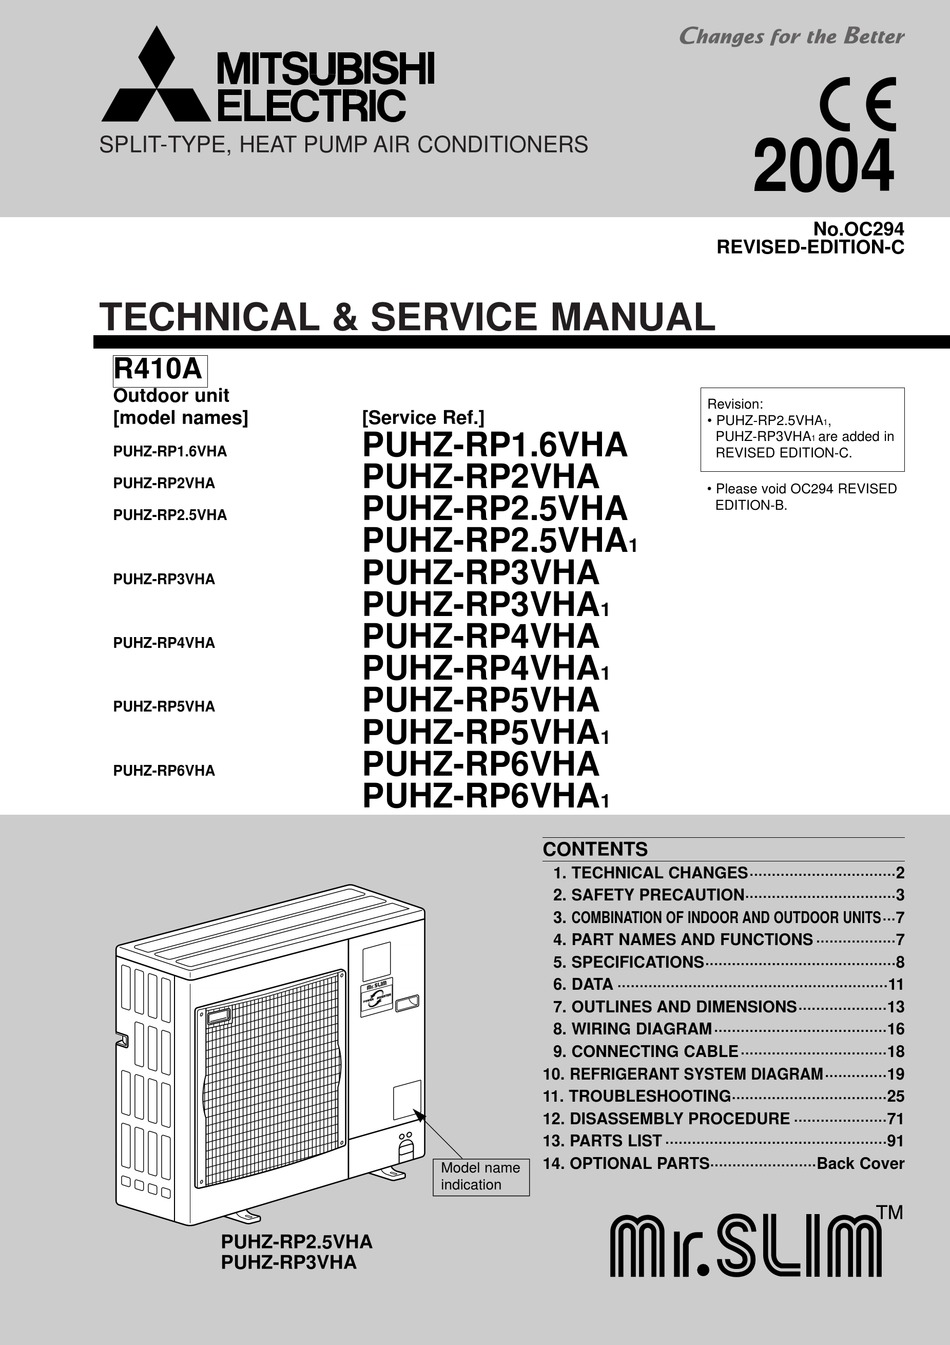 Mitsubishi Puhz-Rp1.6Vha Technical & Service Manual Pdf Download | Manualslib